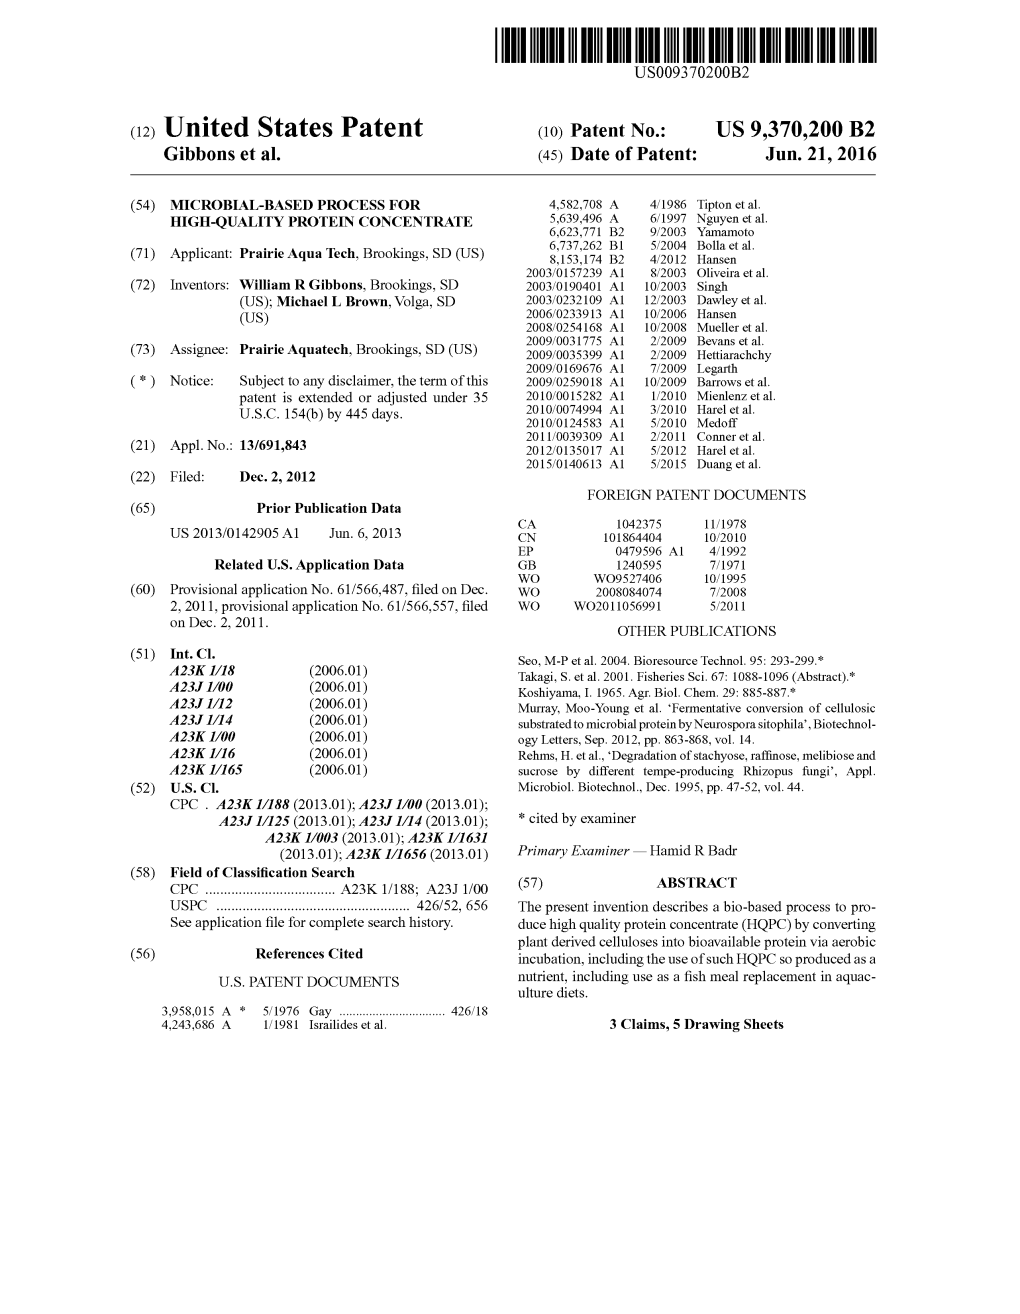 (10) Patent No.: US 9370200 B2